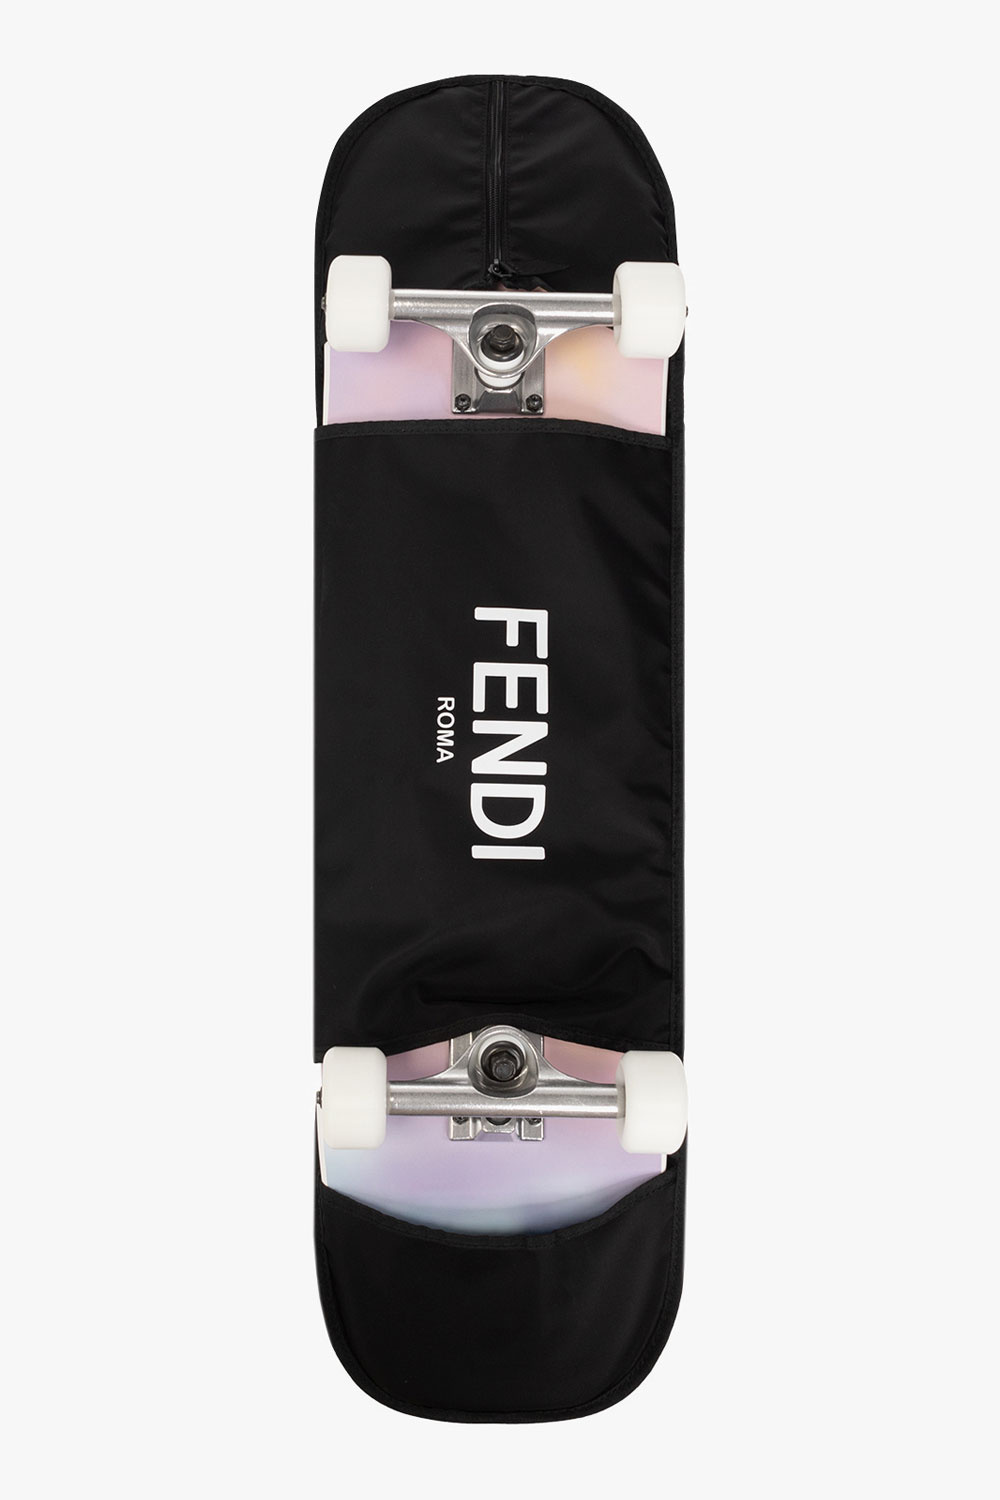 fendi embroidered-logo Skateboard with logo